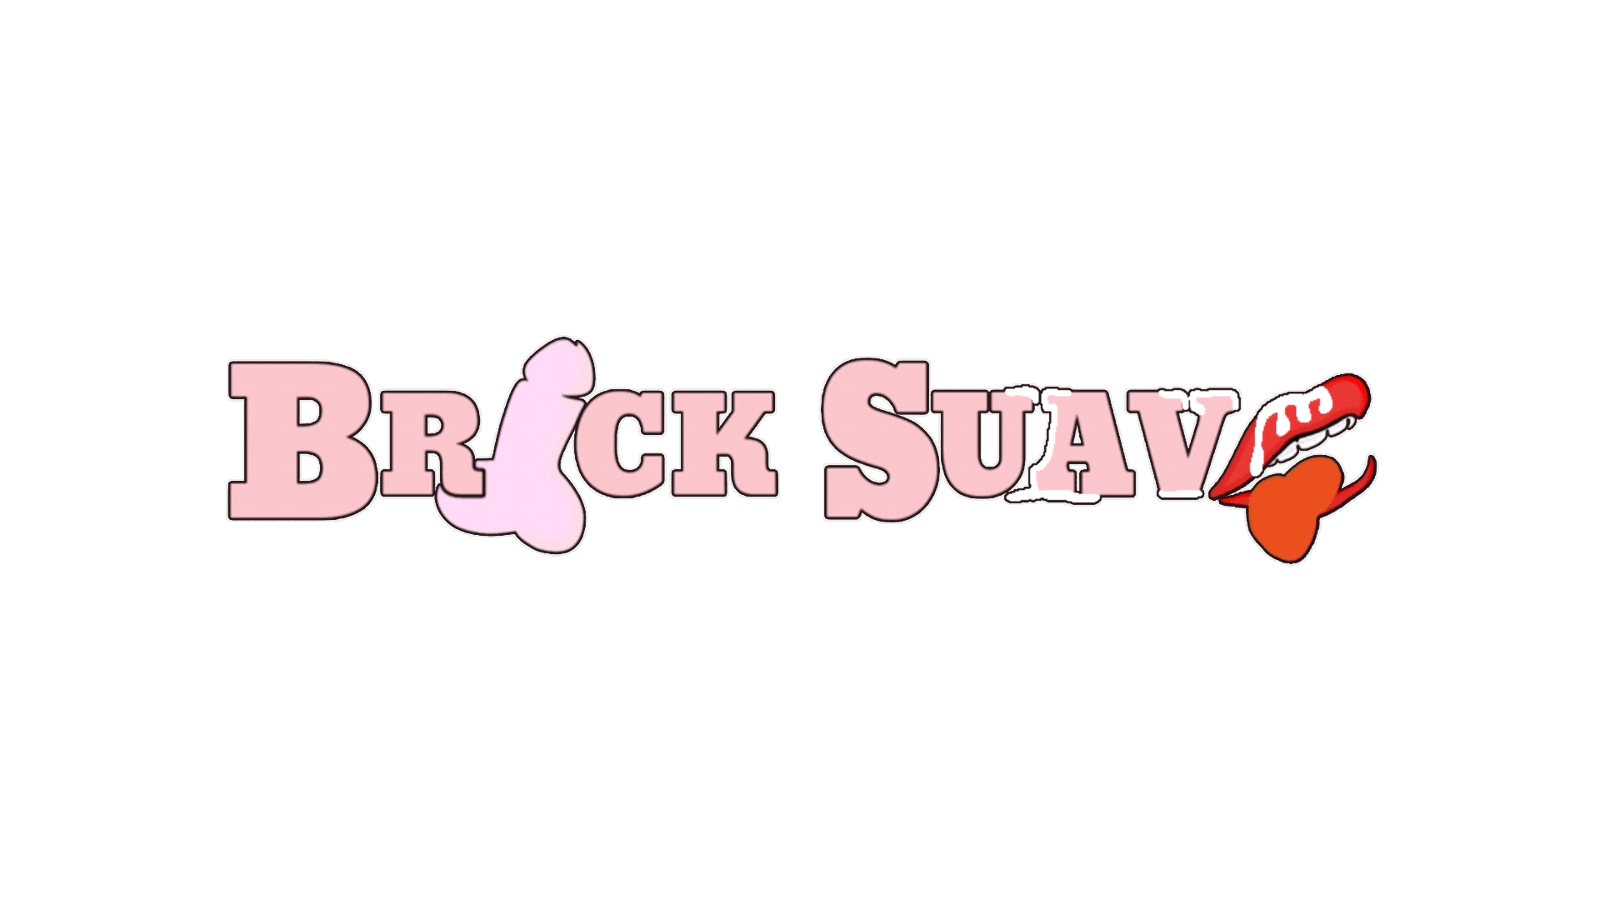 Cover photo of bricksuave